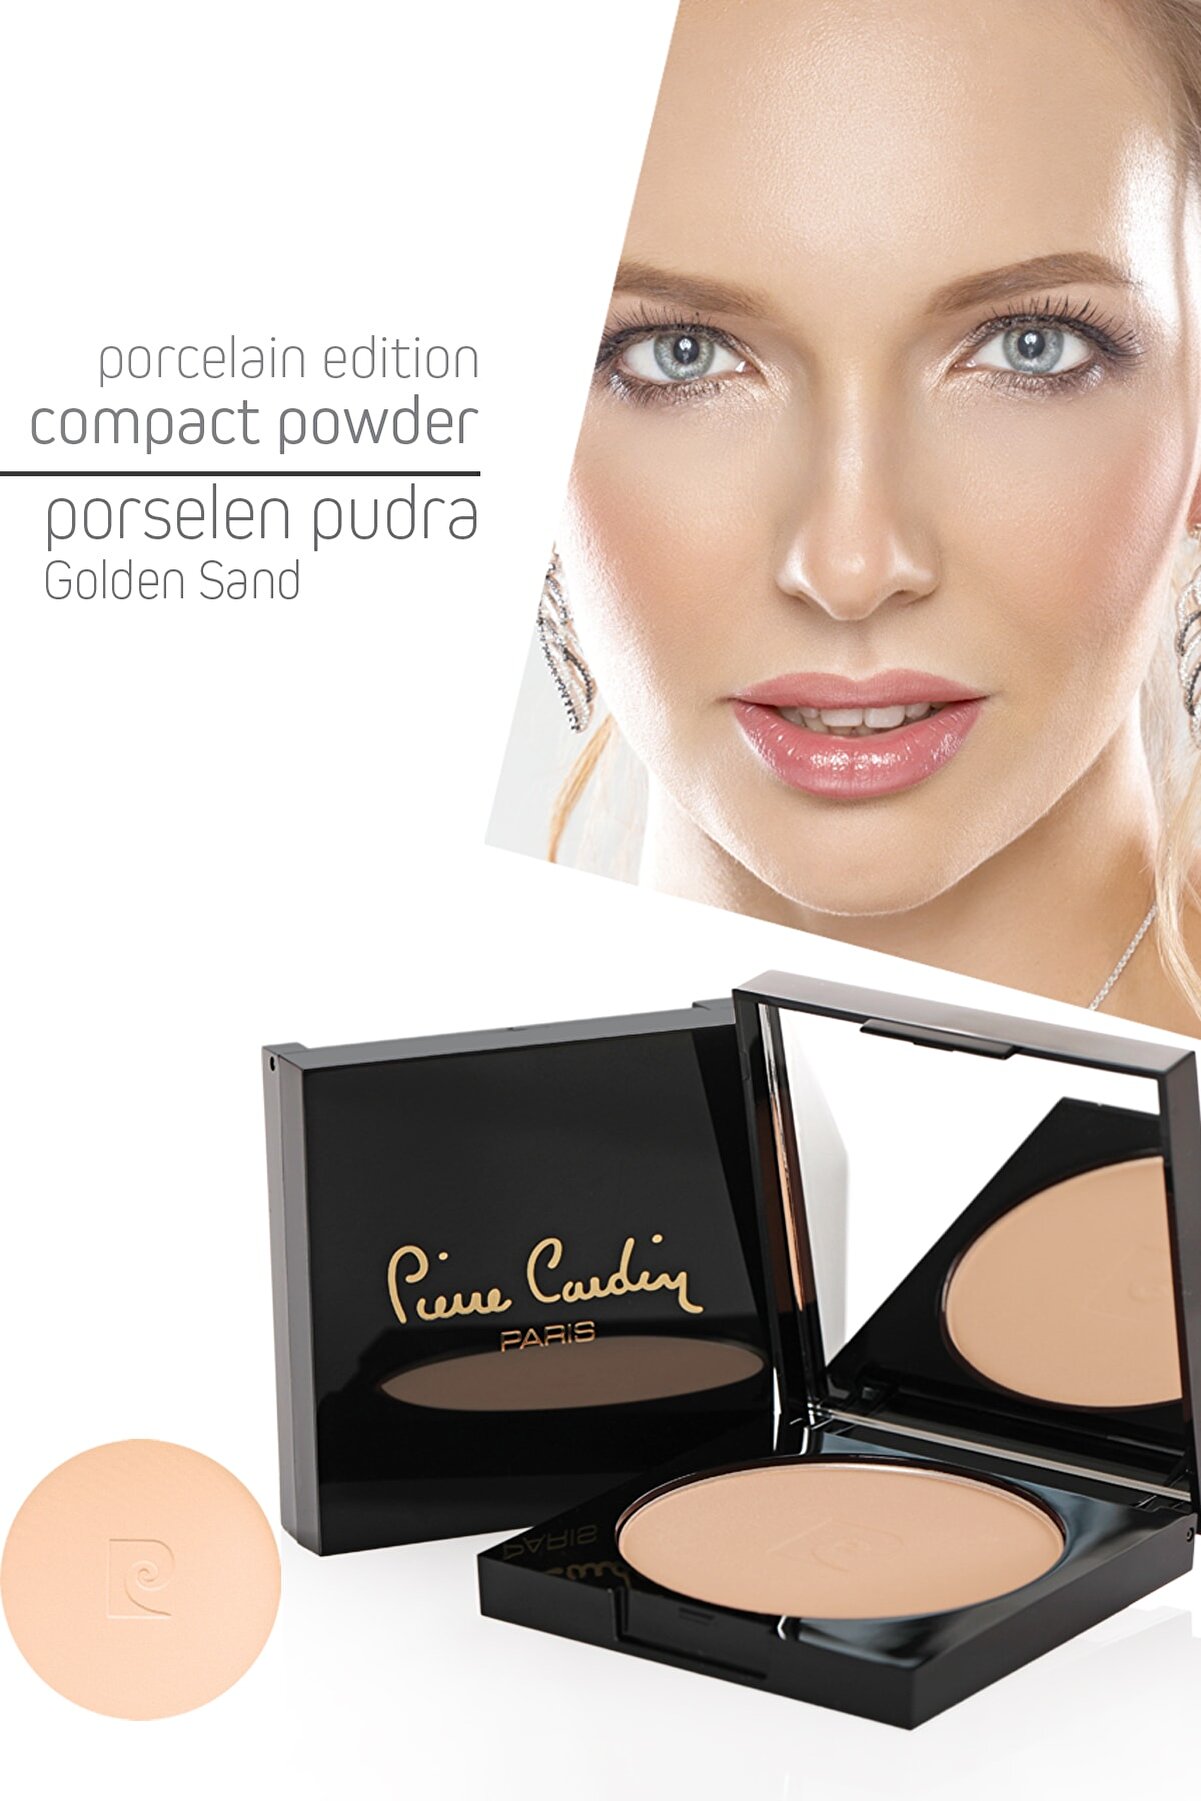 Pierre Cardin Pudra - Porcelain Edition Compact Powder Golden Sand 8680570466790